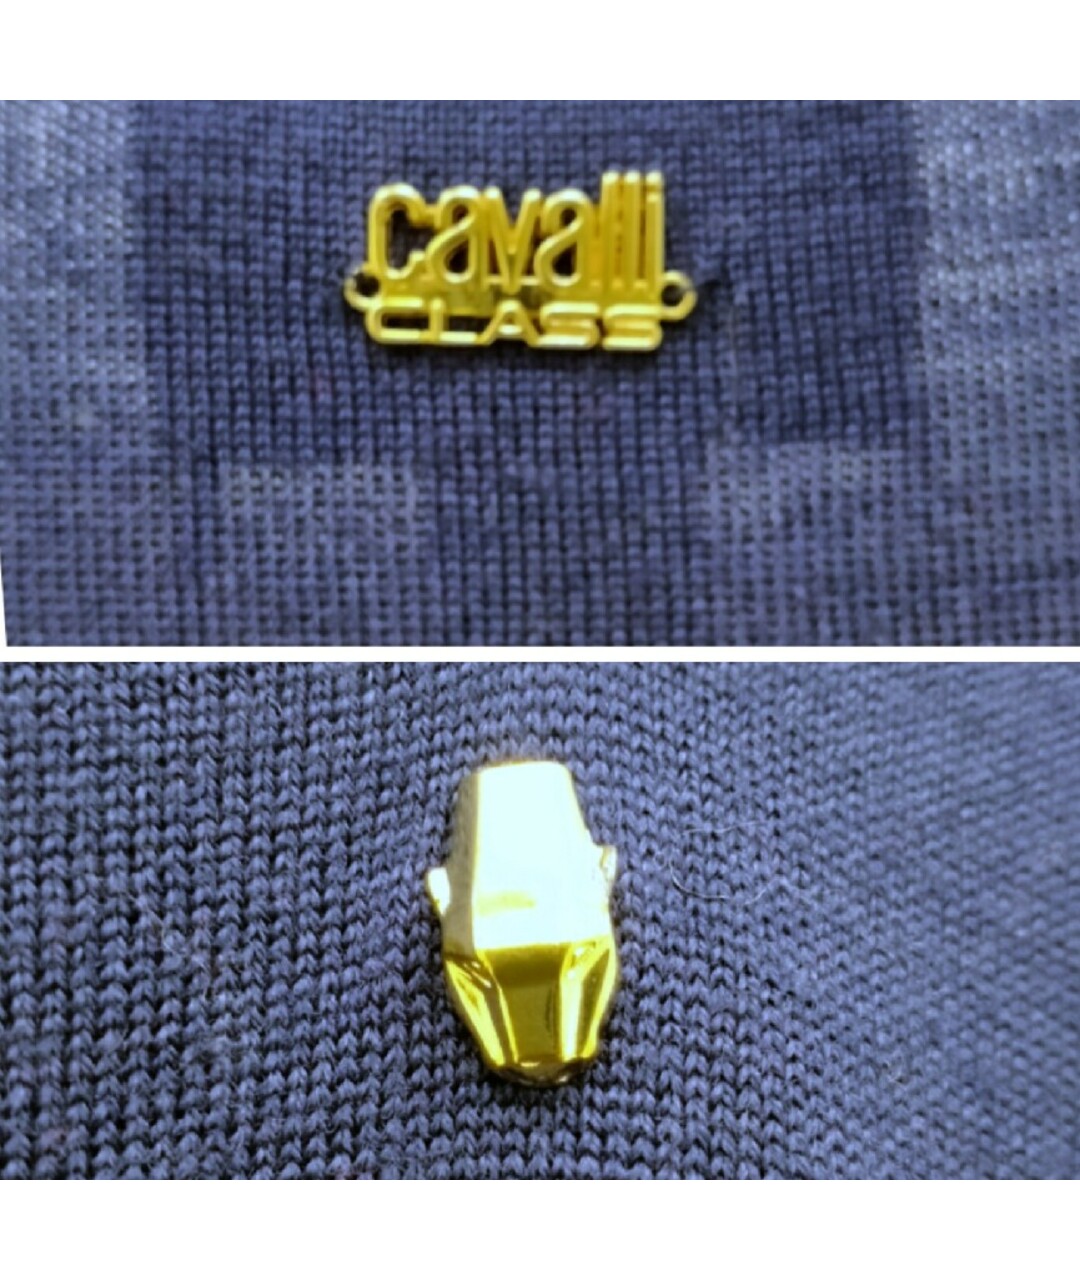 CAVALLI CLASS Синий шерстяной джемпер / свитер, фото 6